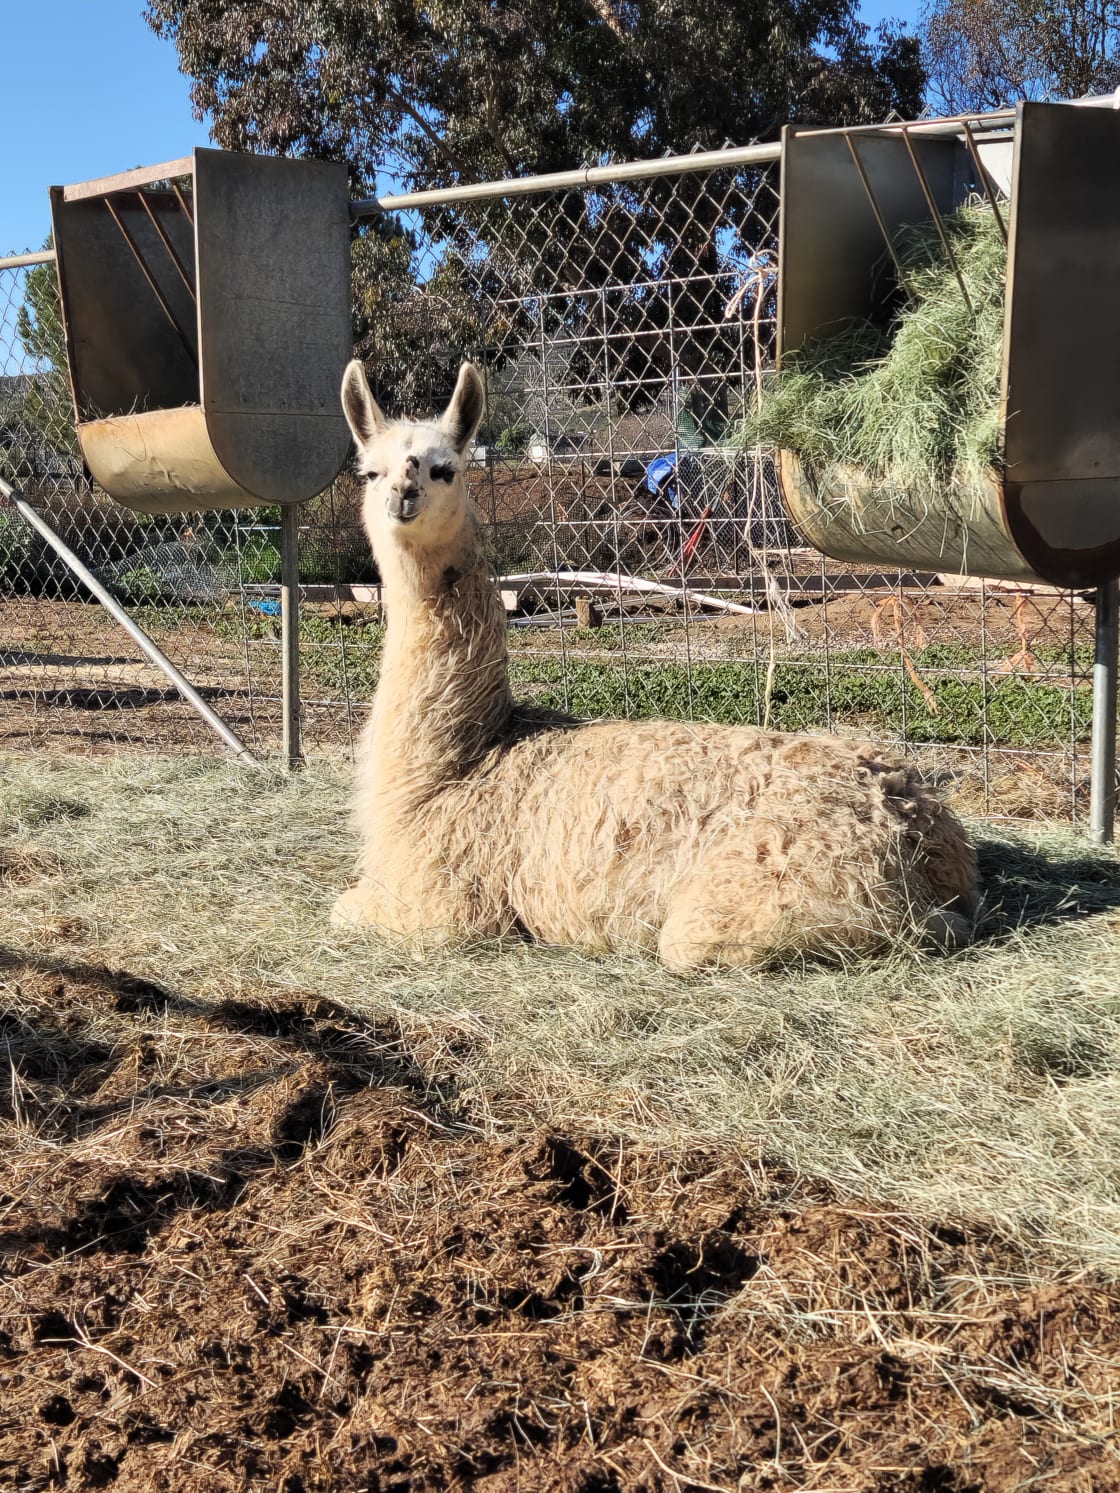 Make lots of new llama friends 